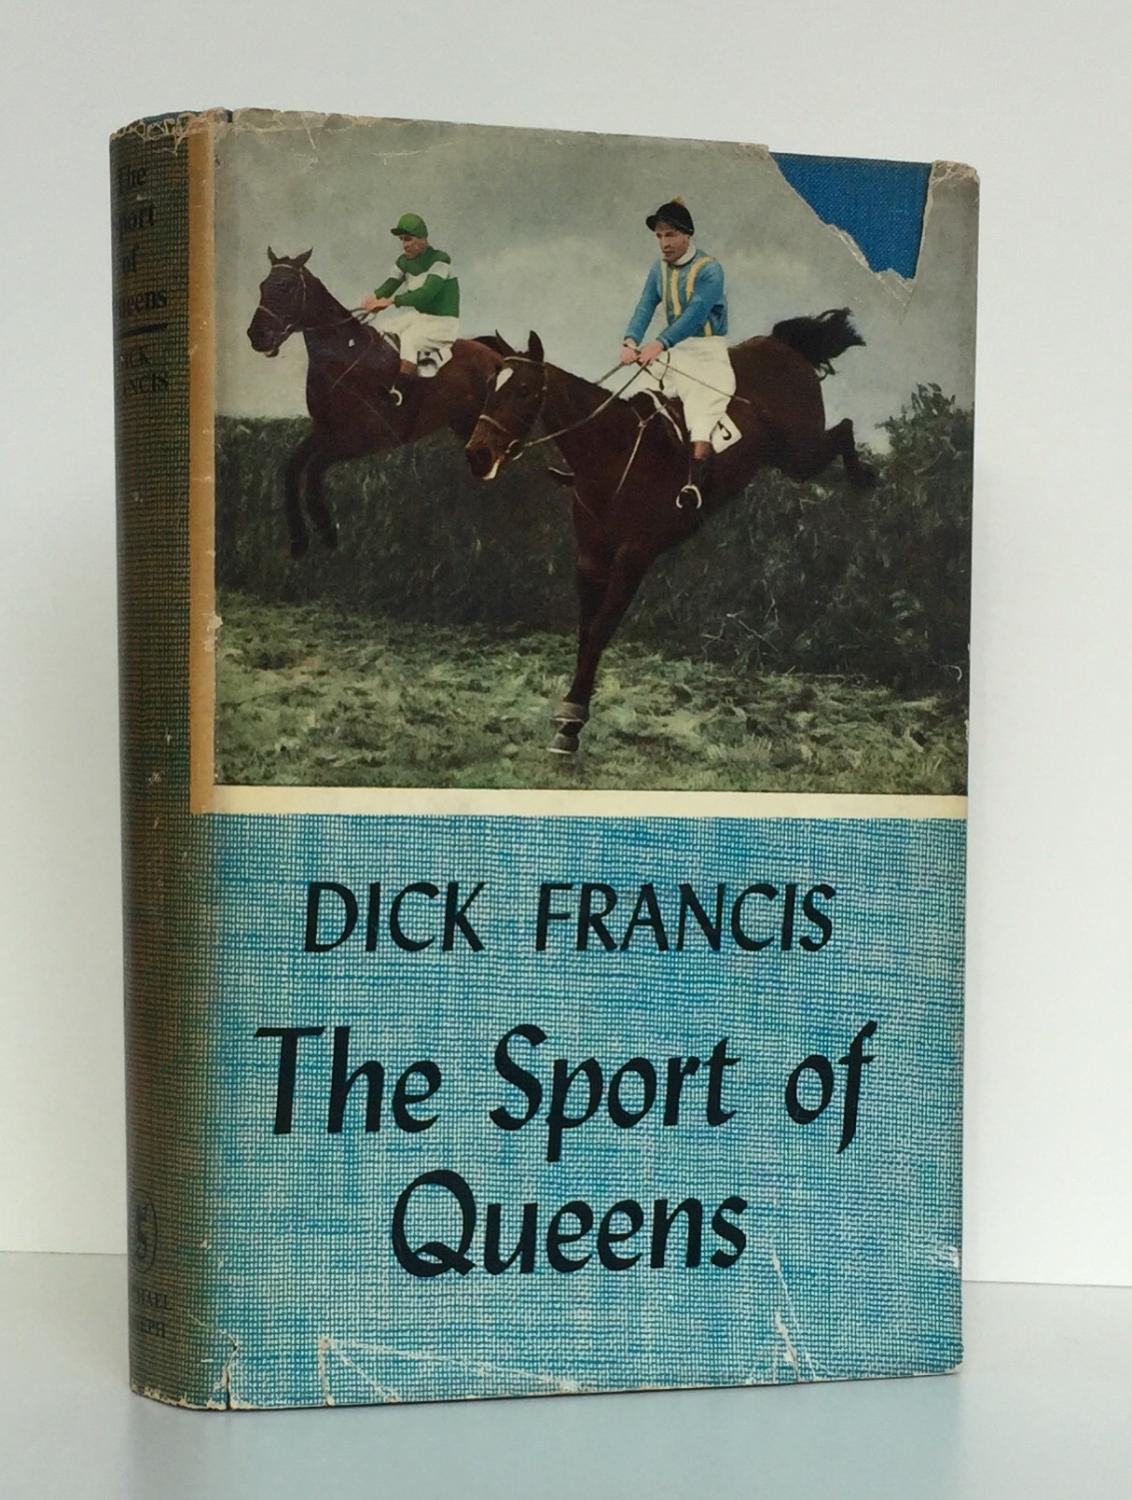 Dick francis sport